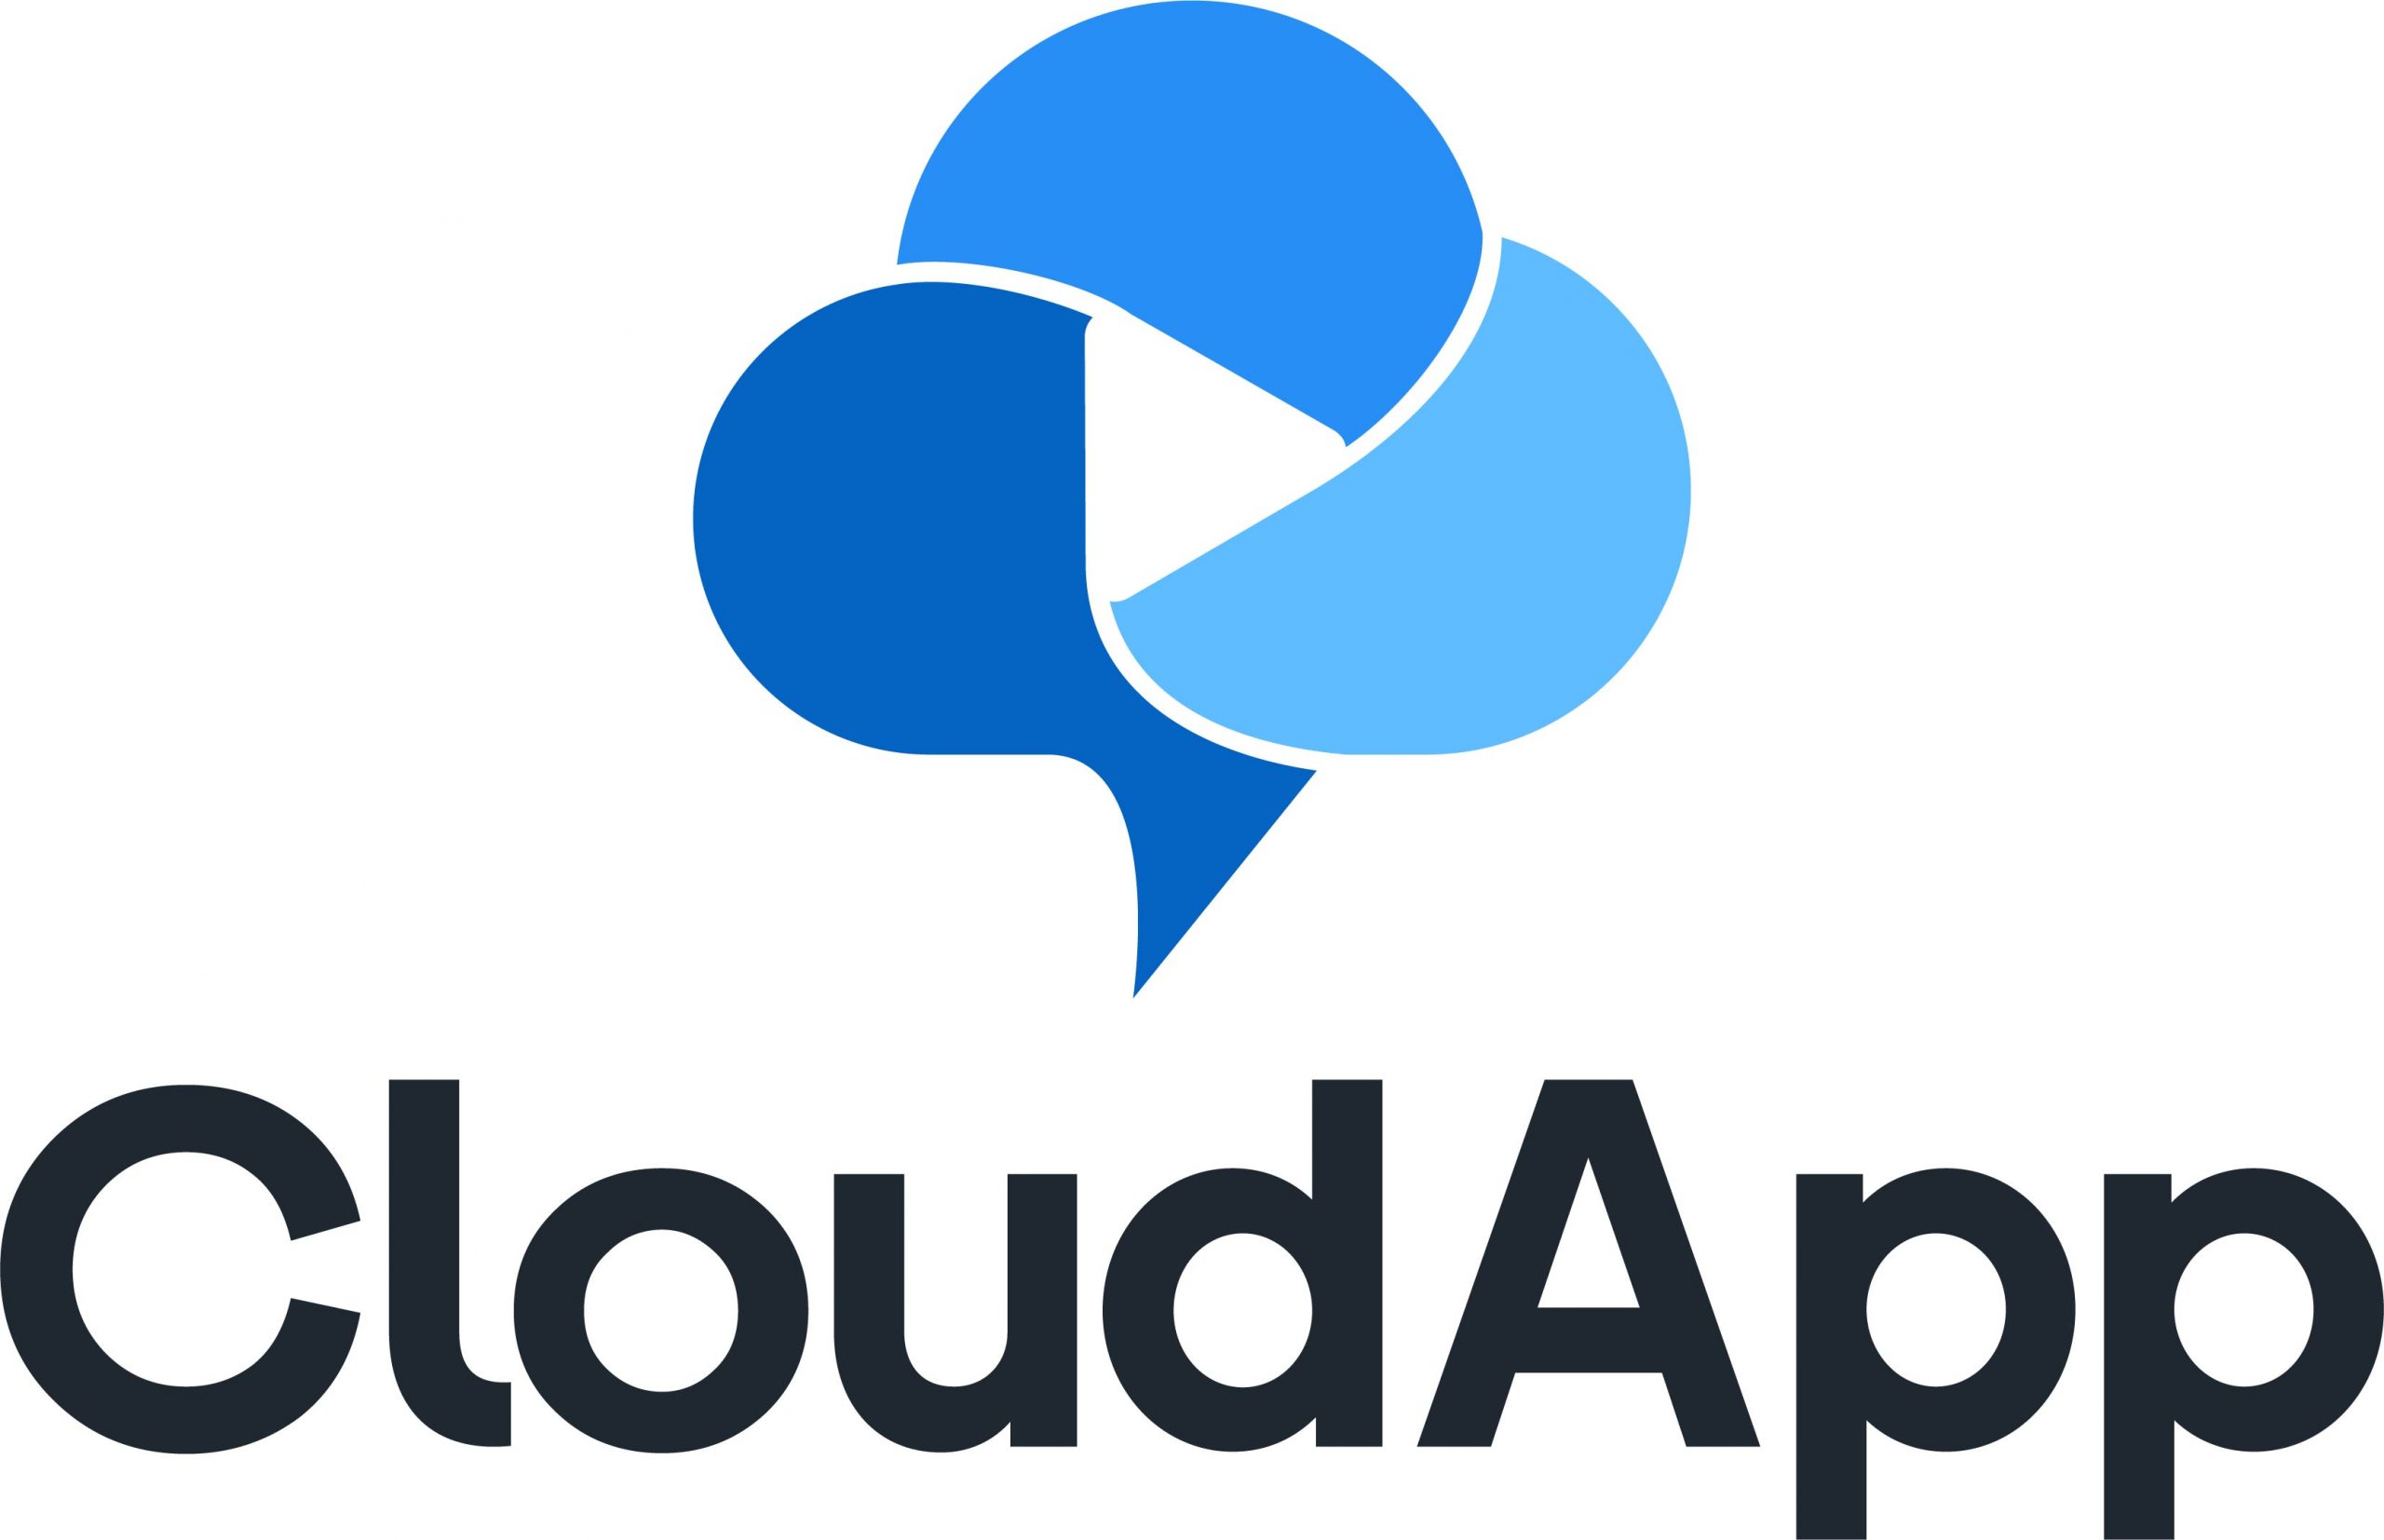 cloud app